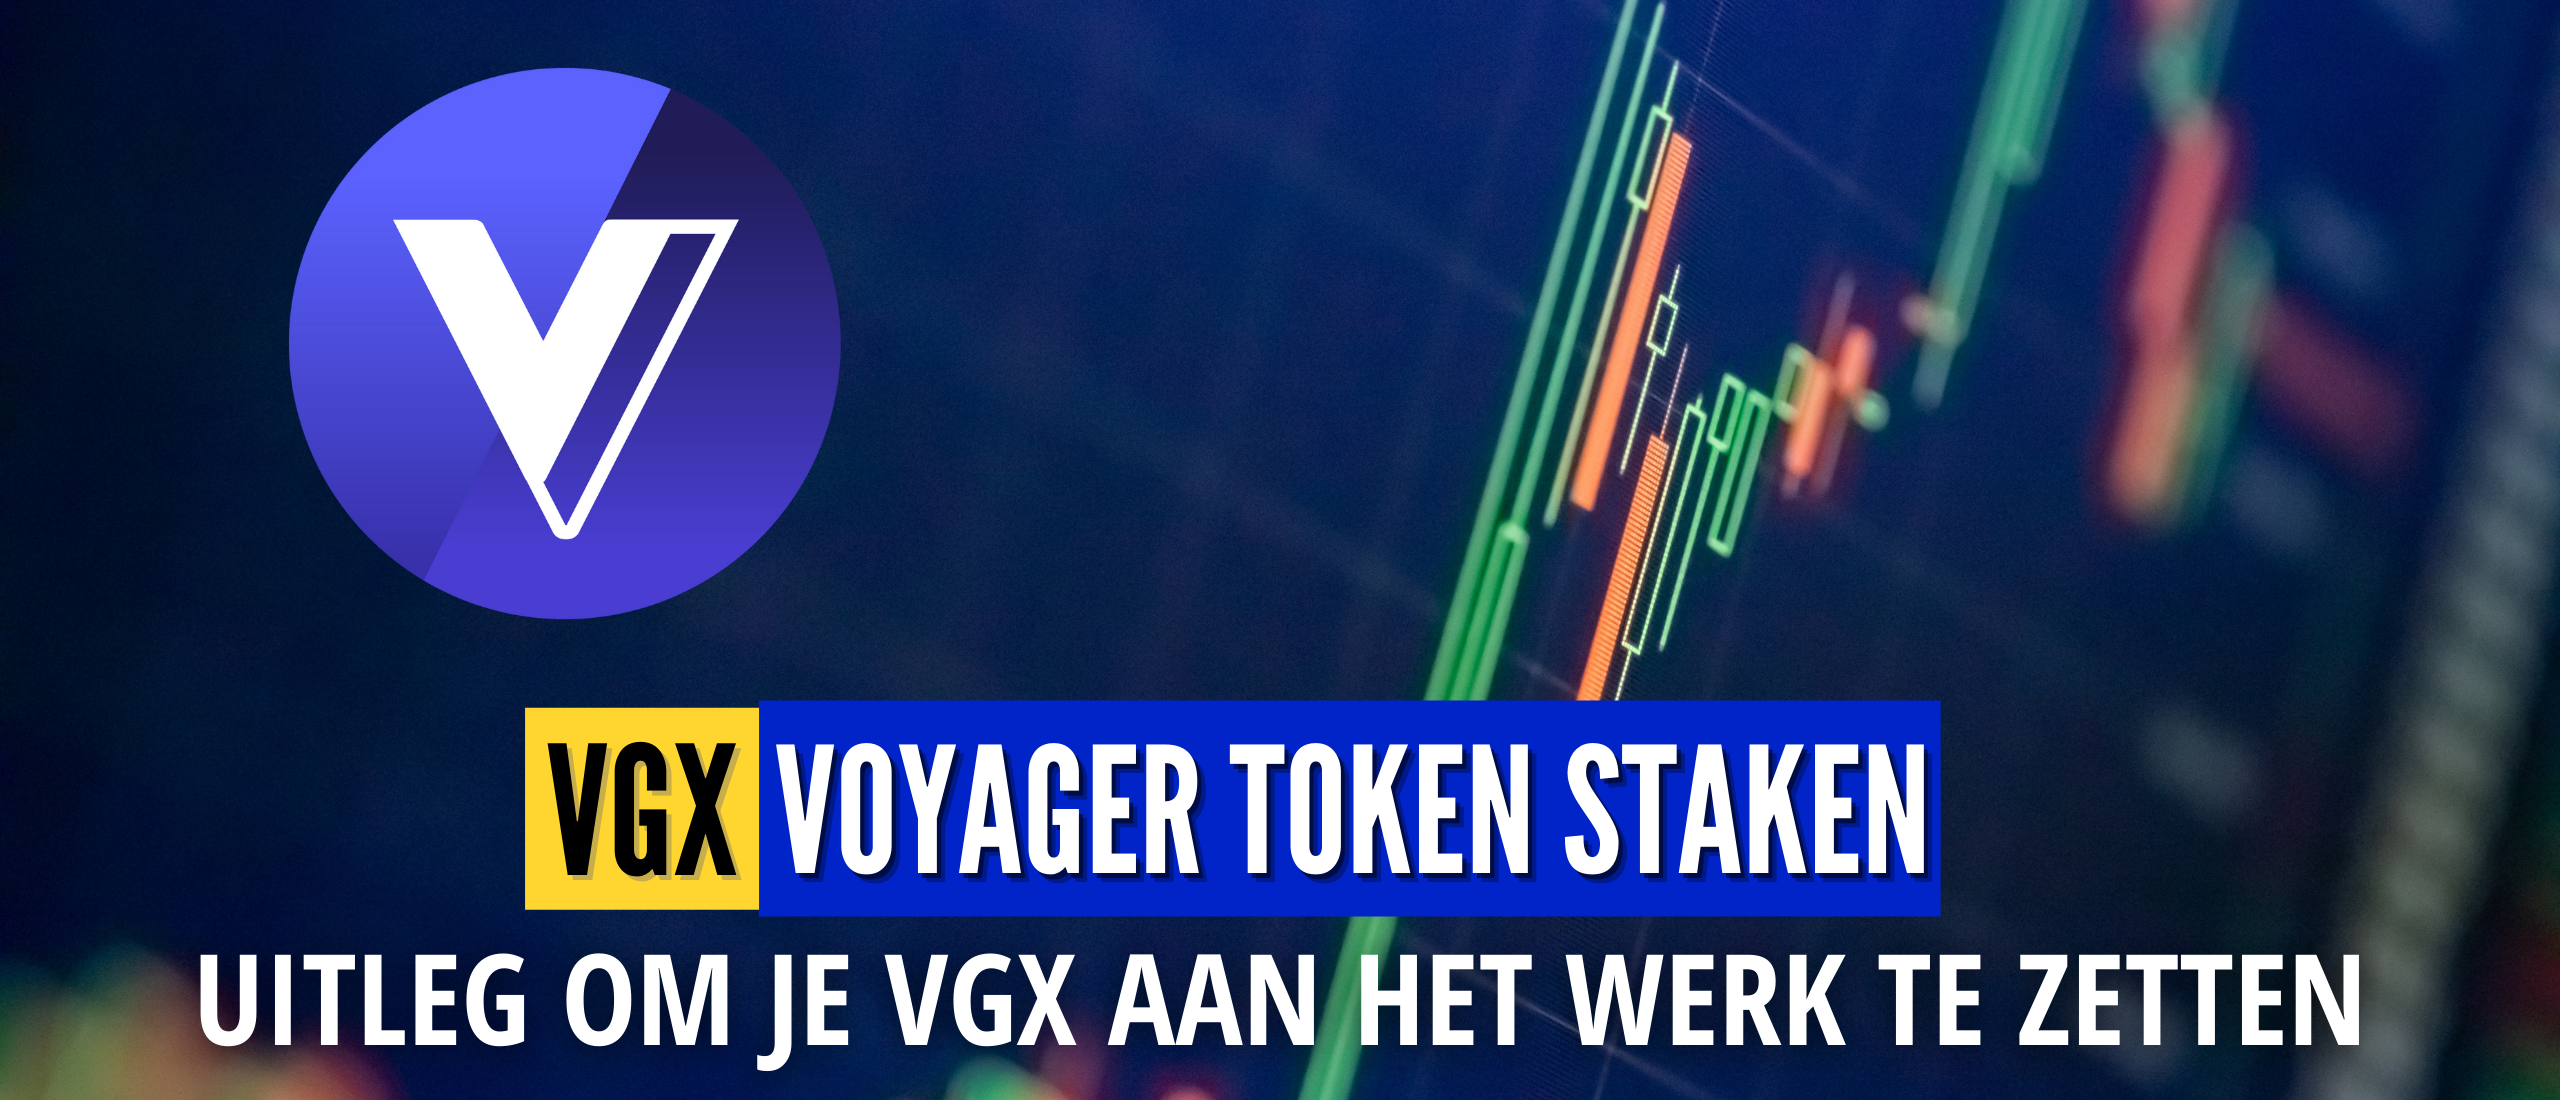 Voyager Token (VGX) Staken bij Binance | Uitleg, Rewards + Stappenplan